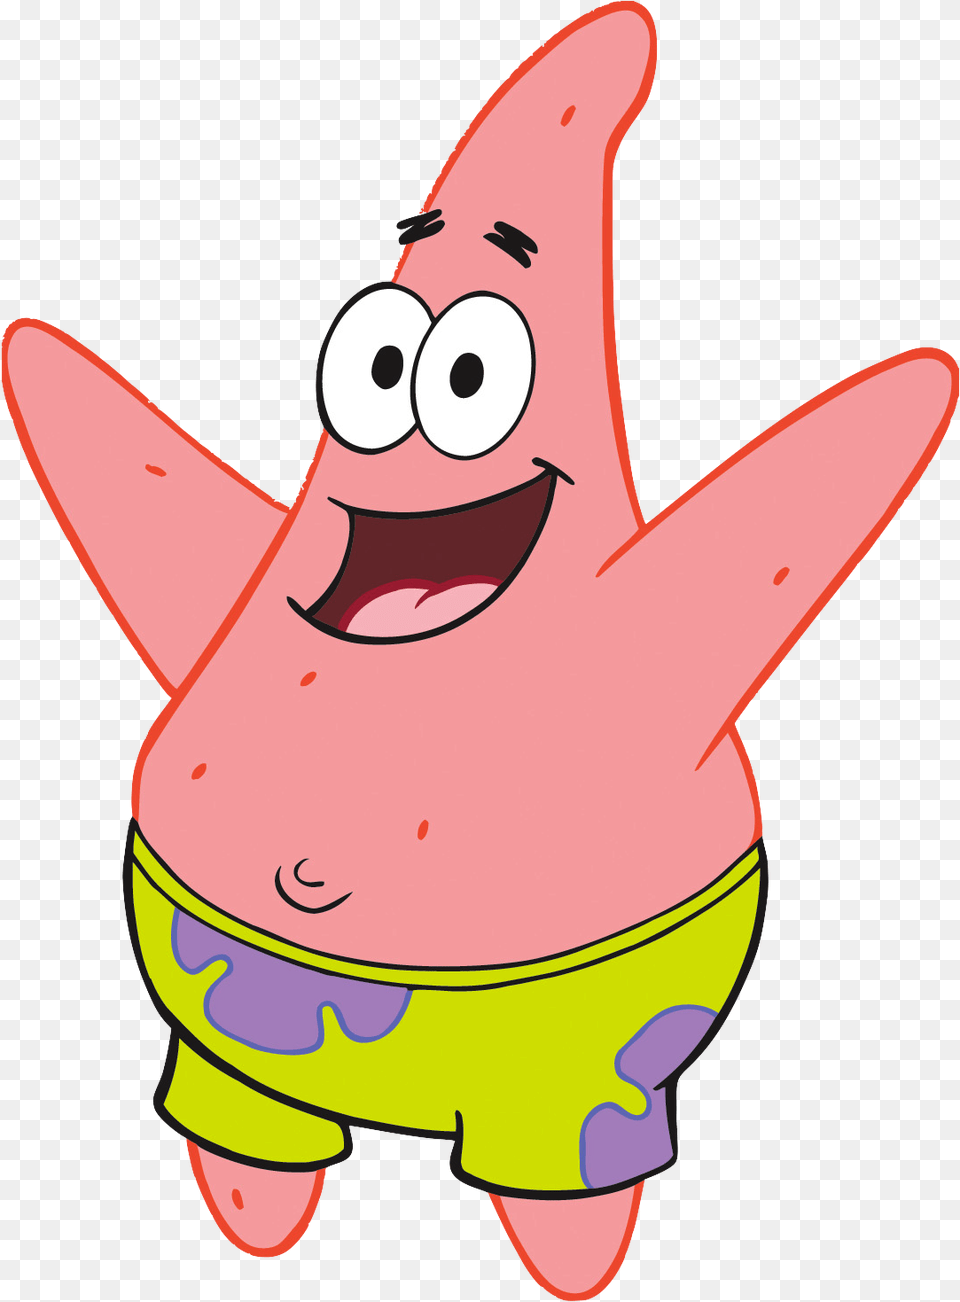 Spongebob Characters Patrick Star Transparent, Cartoon, Animal, Fish, Sea Life Png